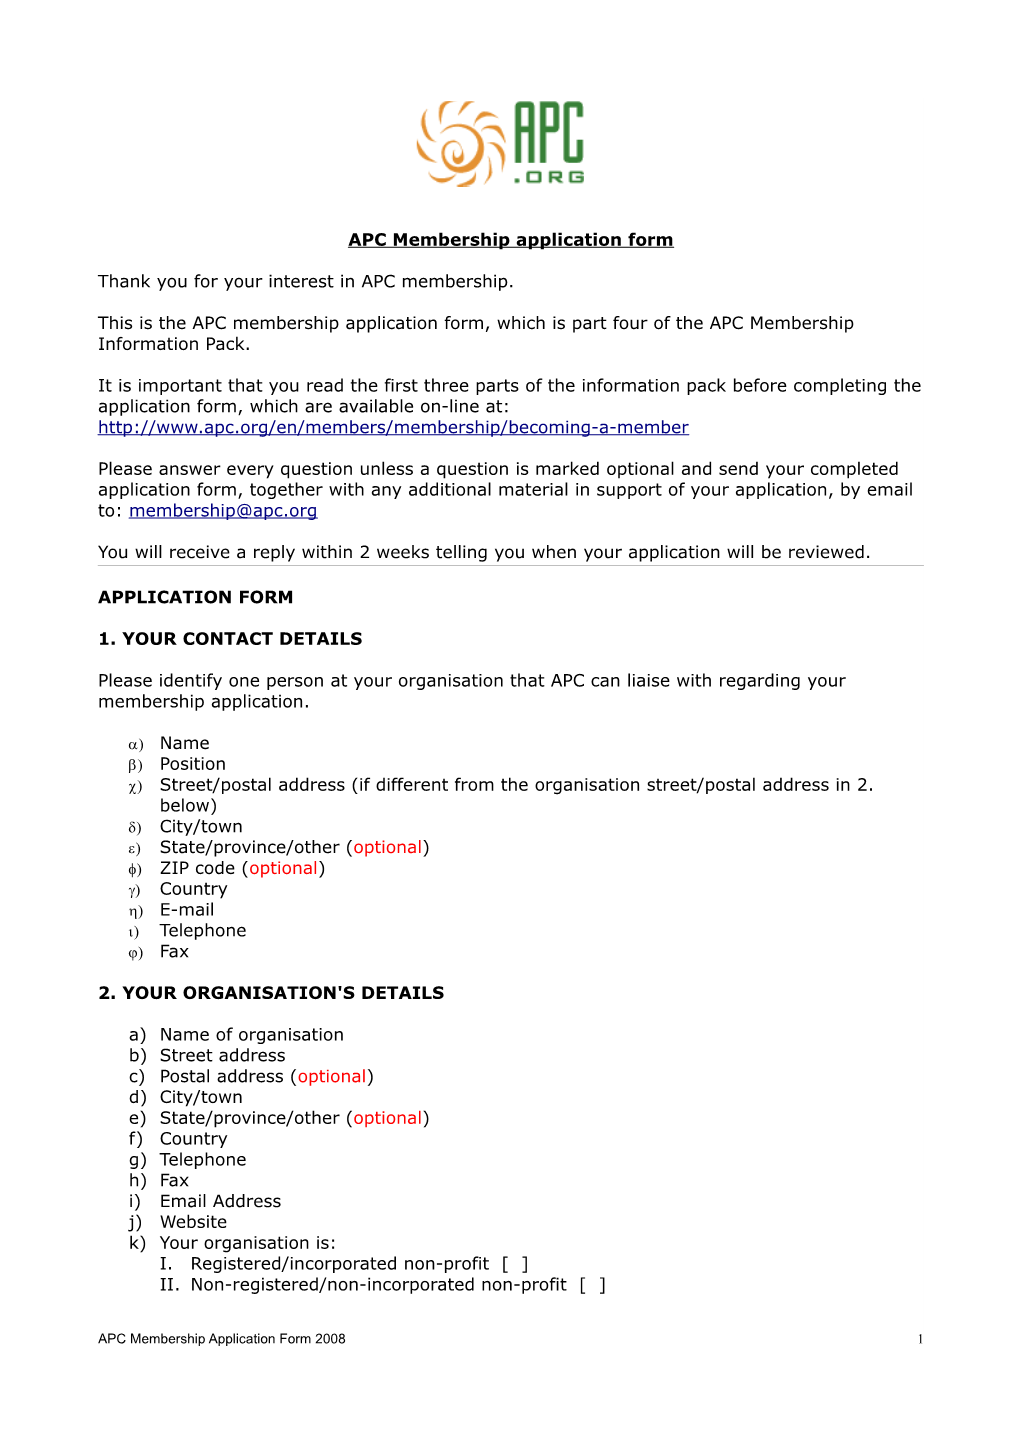 APC Membership Application Form